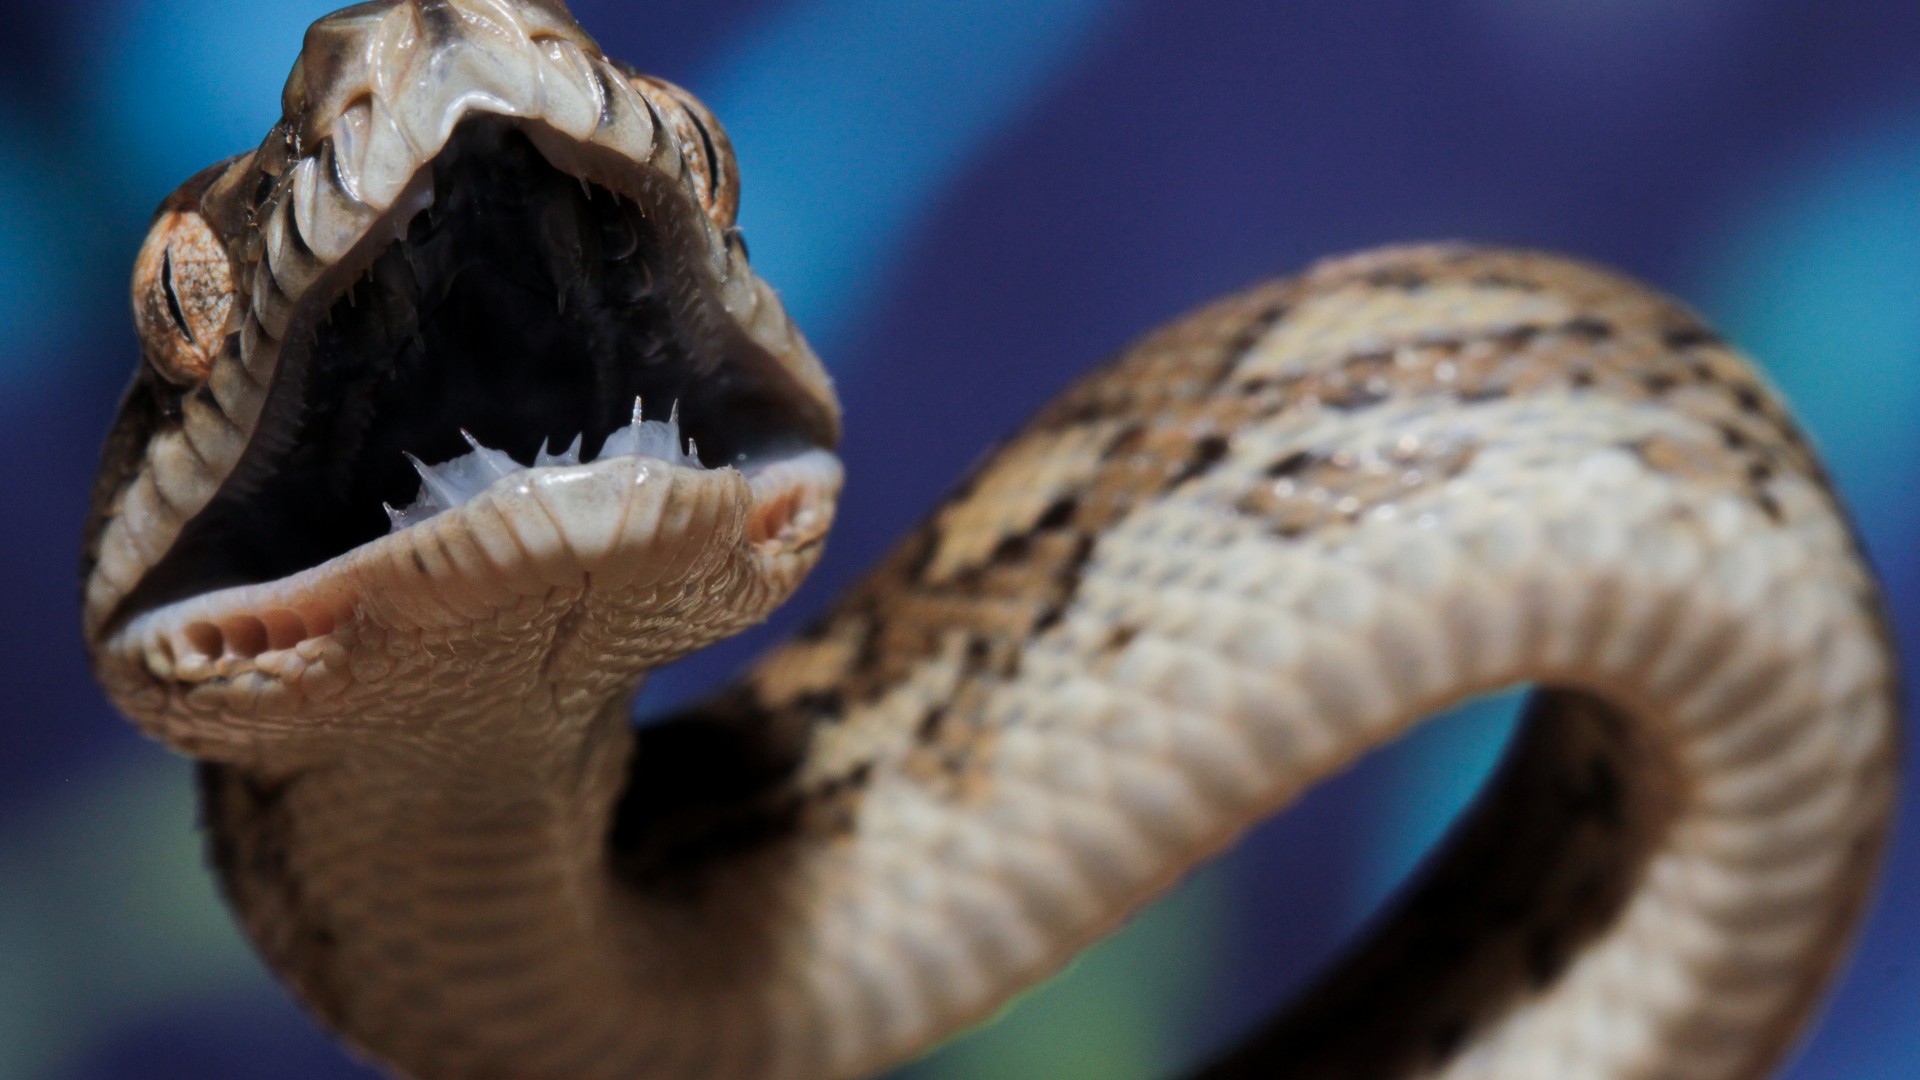 Coastal carpet python, Australia, teeth, tourism, eyes, angry, attack, animal, reptile, blue, grey, brown, snake (horizontal)